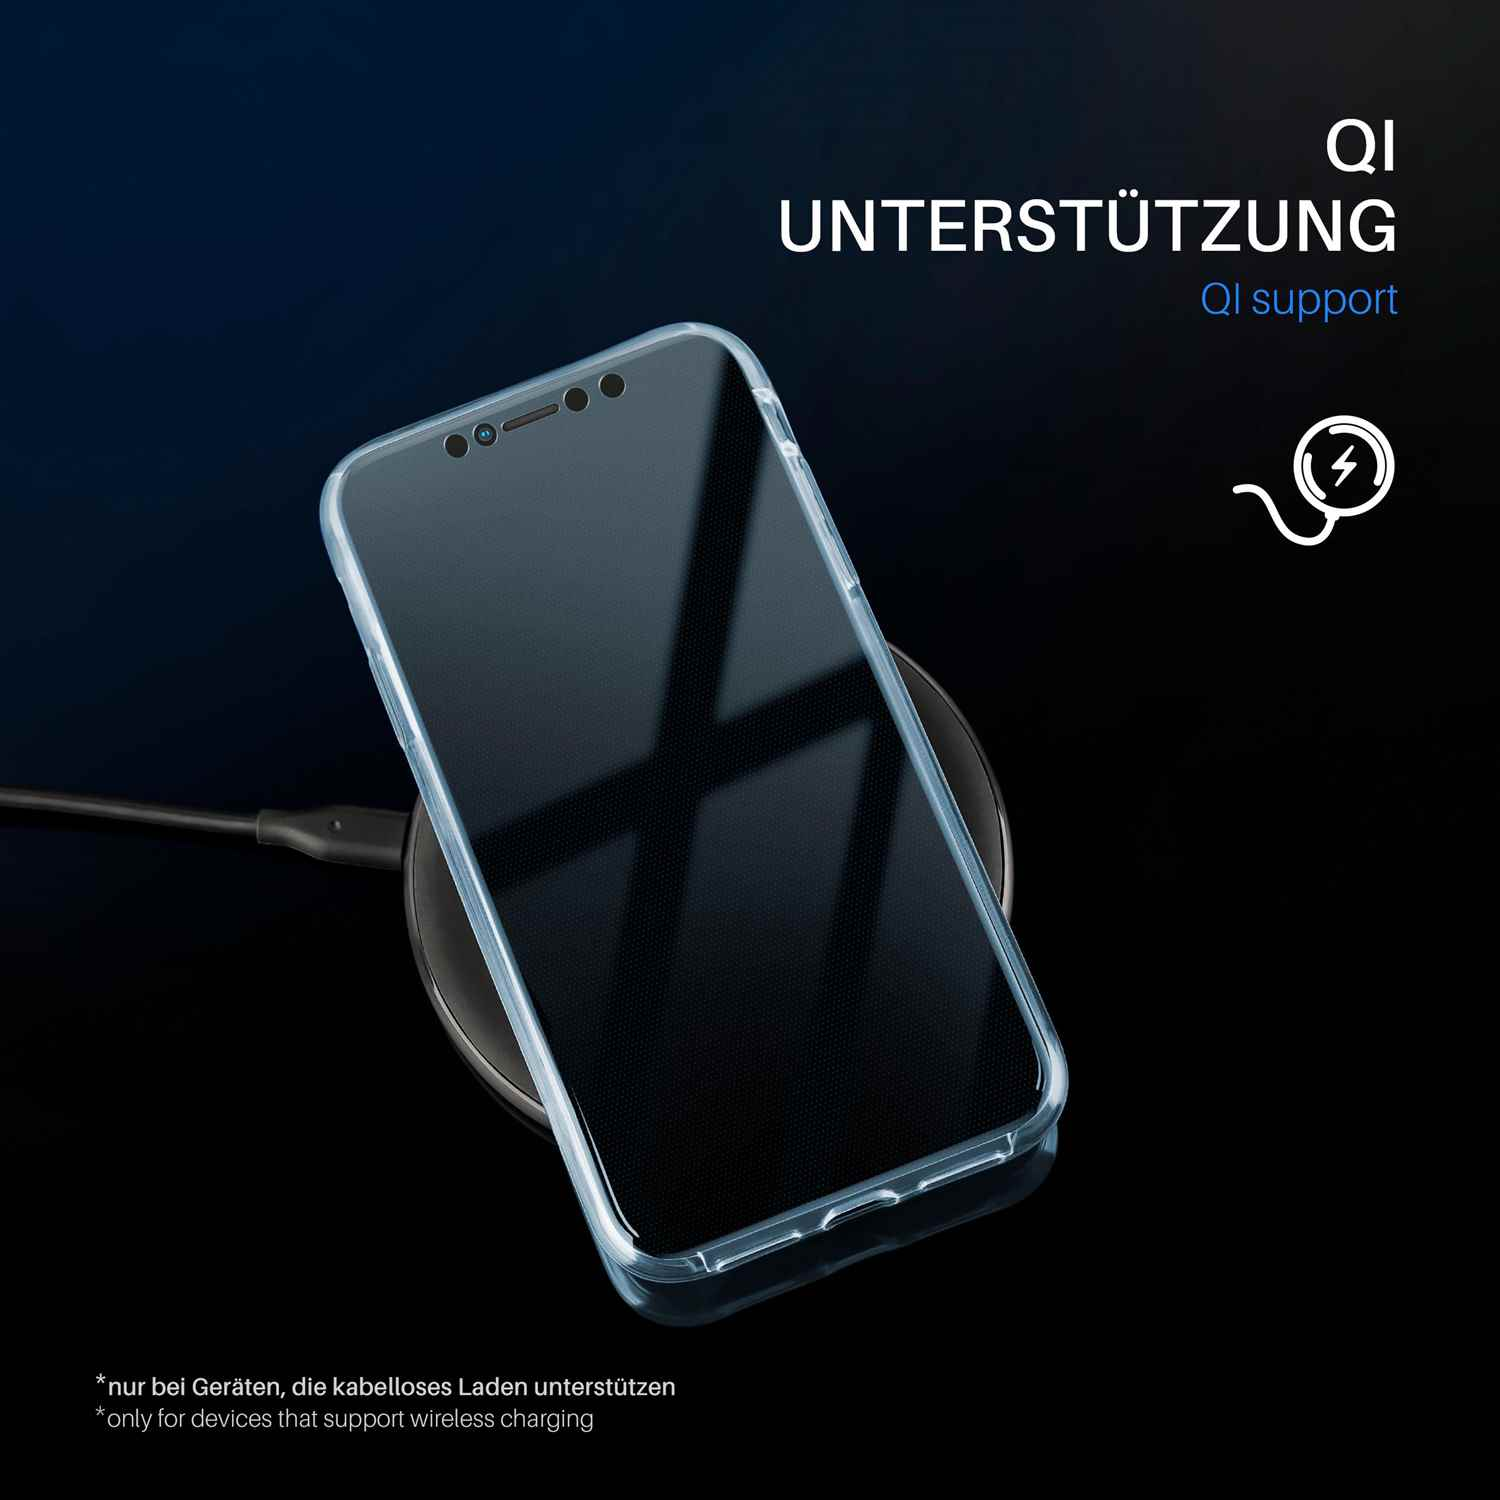 MOEX Double Case, Full Cover, Galaxy Aqua Samsung, S3